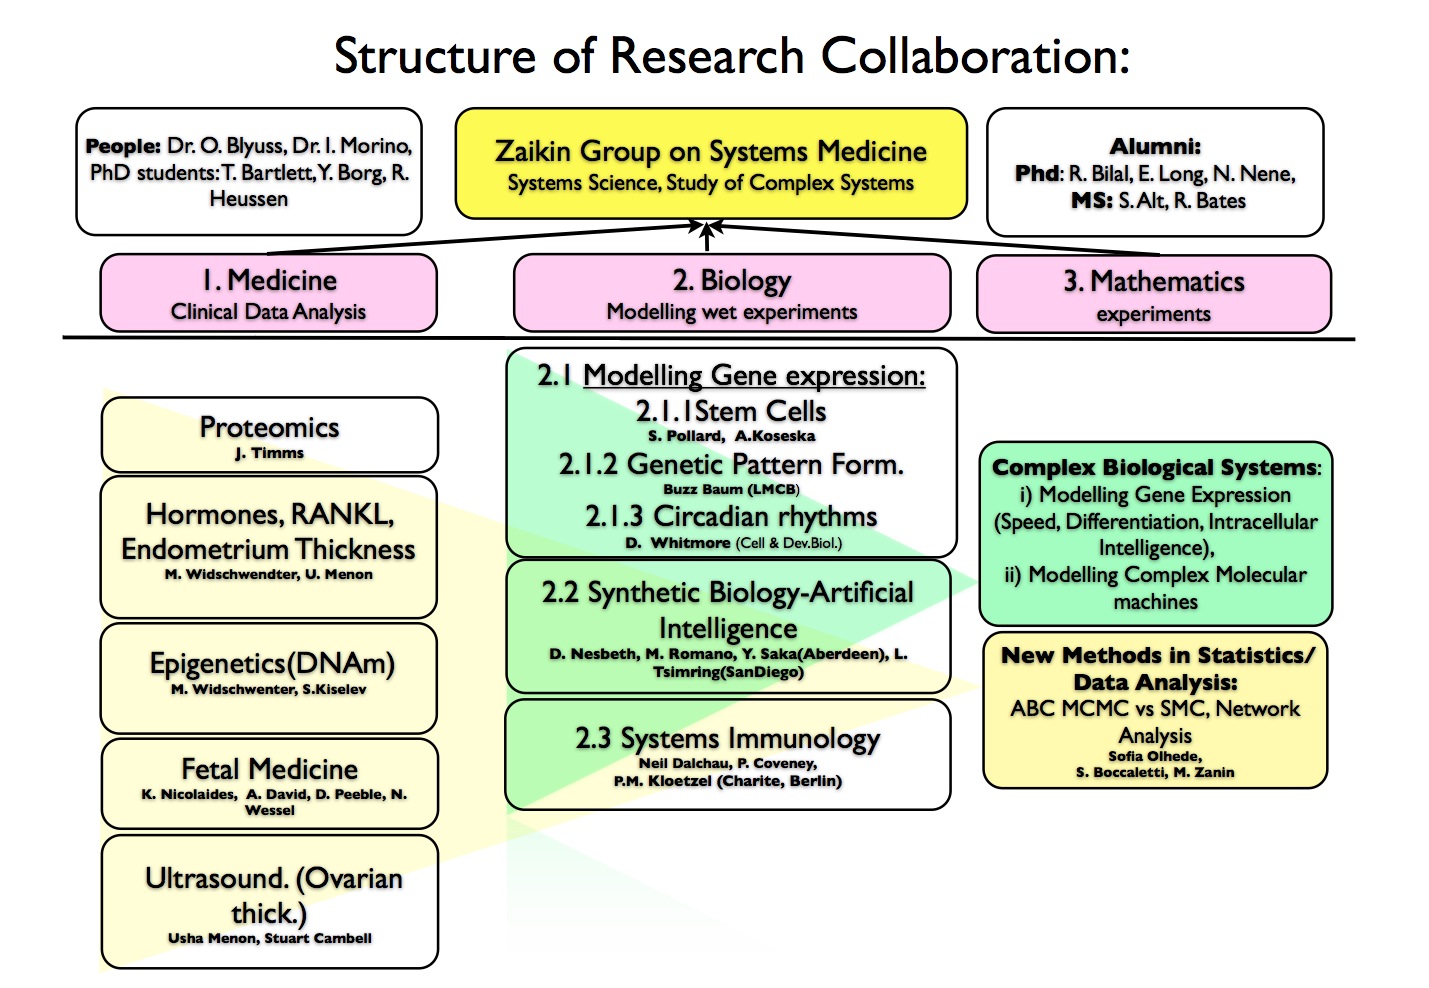 Collaboration Spectrum of the Zaikin Lab